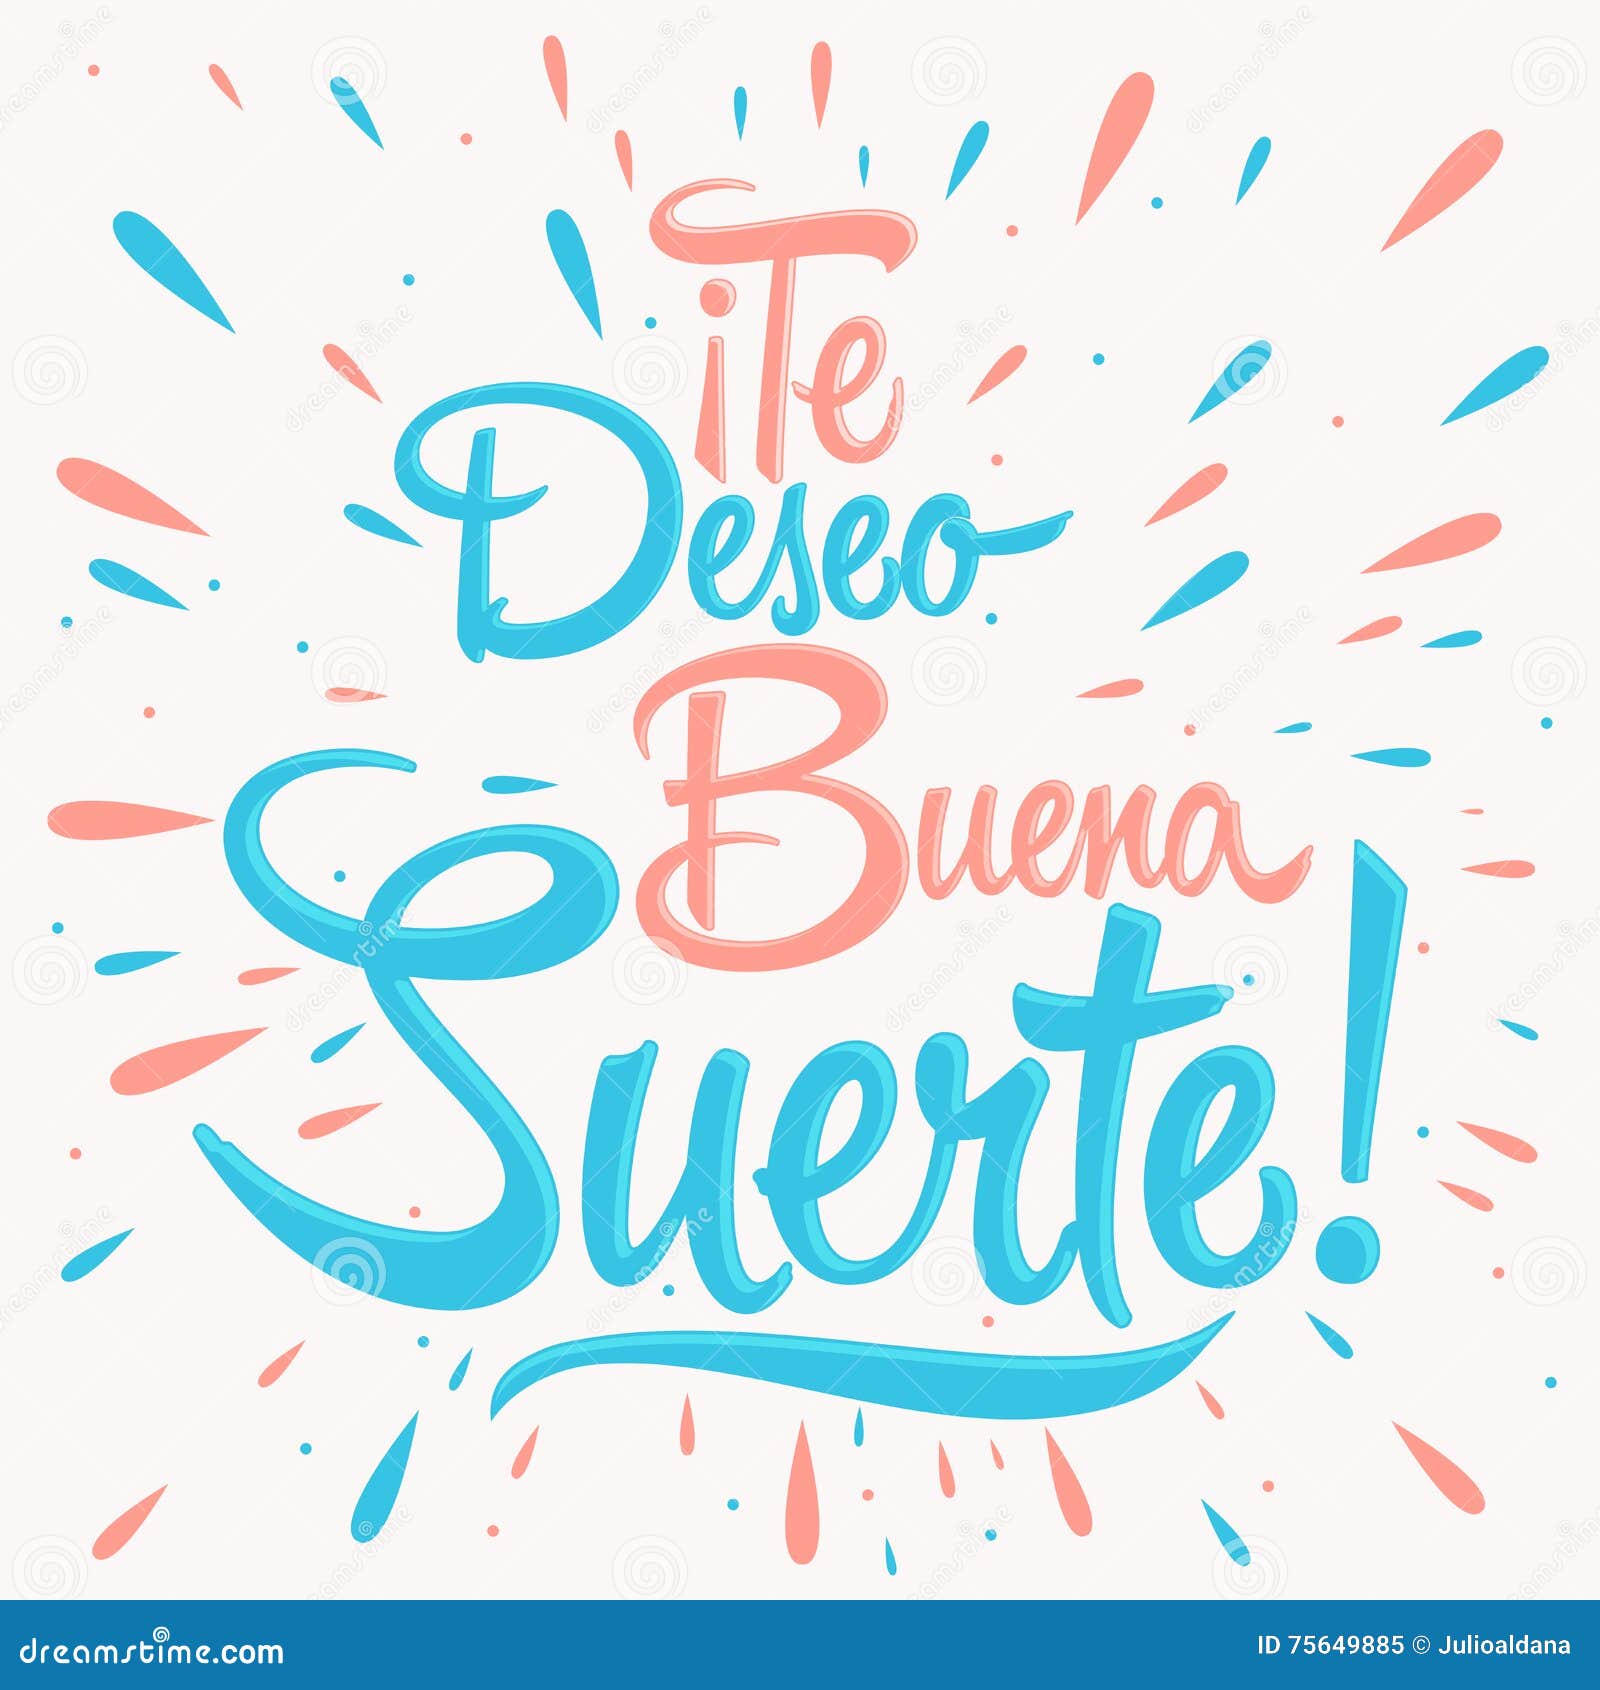 te deseo buena suerte - i wish you good luck spanish text, quote typography